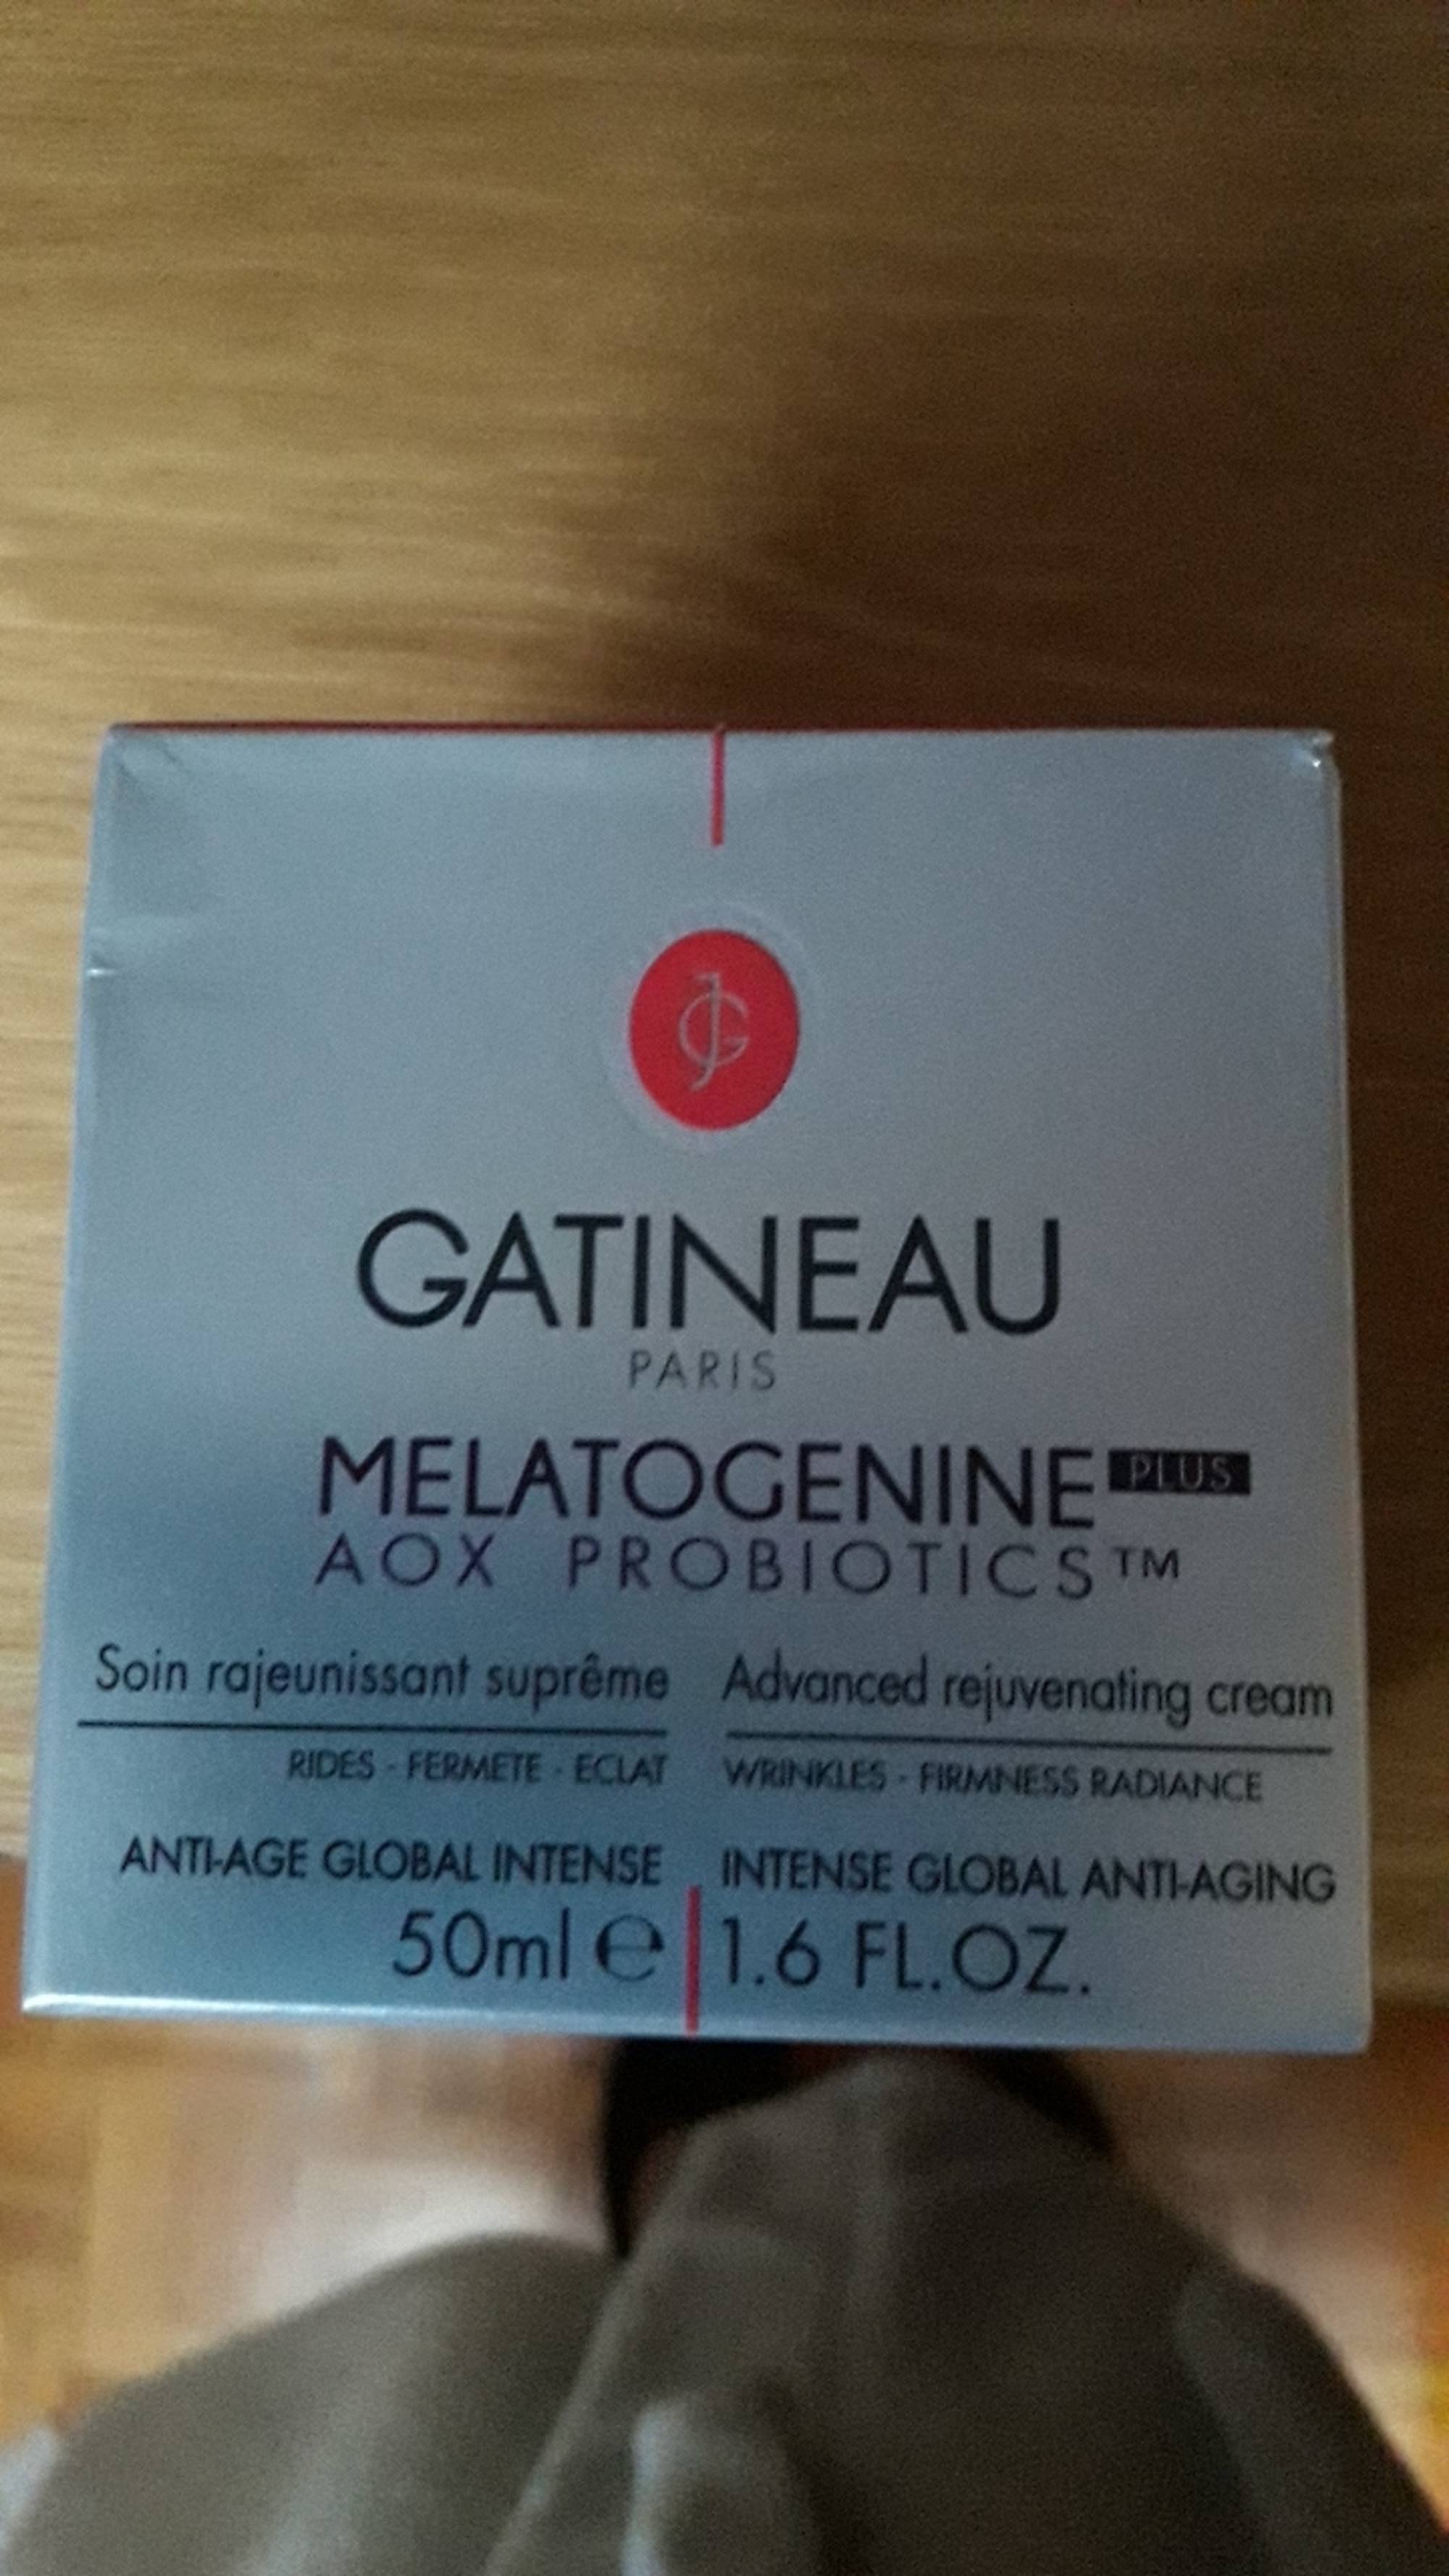 GATINEAU - Melatogenine plus aox probiotics - Anti-age global intense 